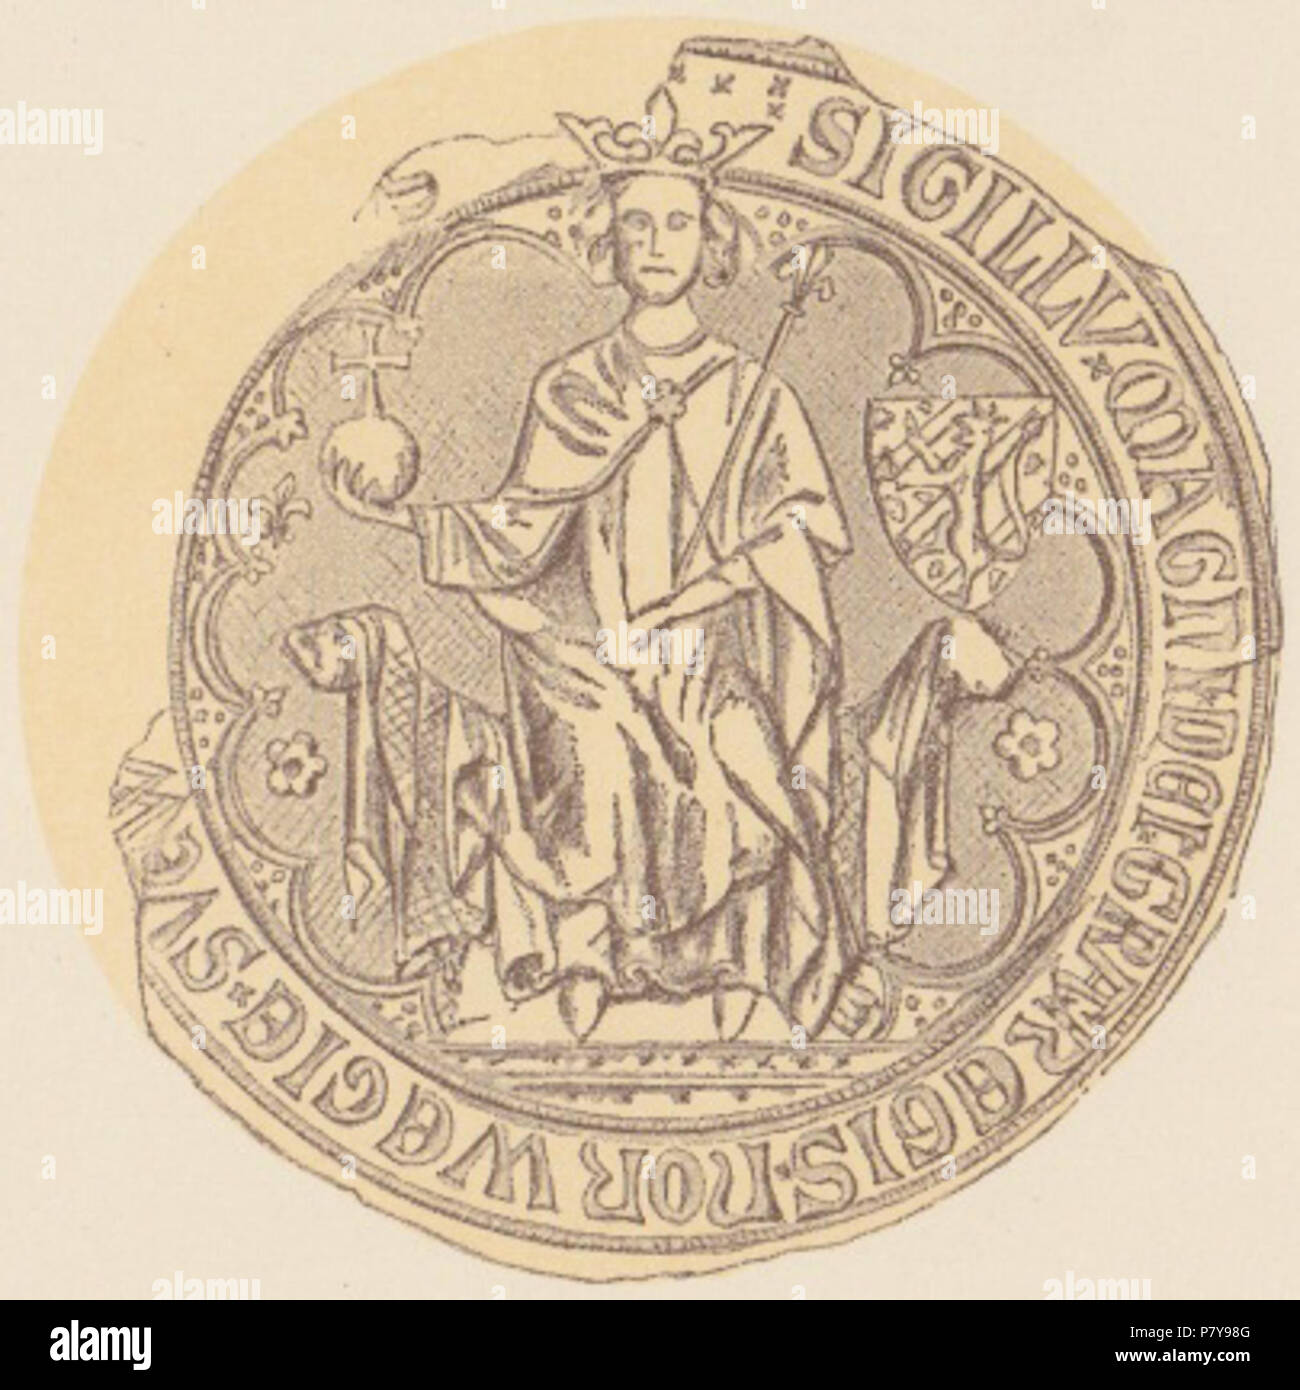 English: Seal (front) of King Magnus VII of Norway/Magnus IV of Sweden, based on 22 documents, dated 1321–67. Text: ' : SIGILLVm  MAGNI  DEI : GRaciA : REGIS  NORWEGIE : SVEWORVM : ET : GOTORvm ILLVSTriS :'. Size: 92 mm. 4 August 2012 234 Kong Magnus Eriksson PI XV 1 Stock Photo